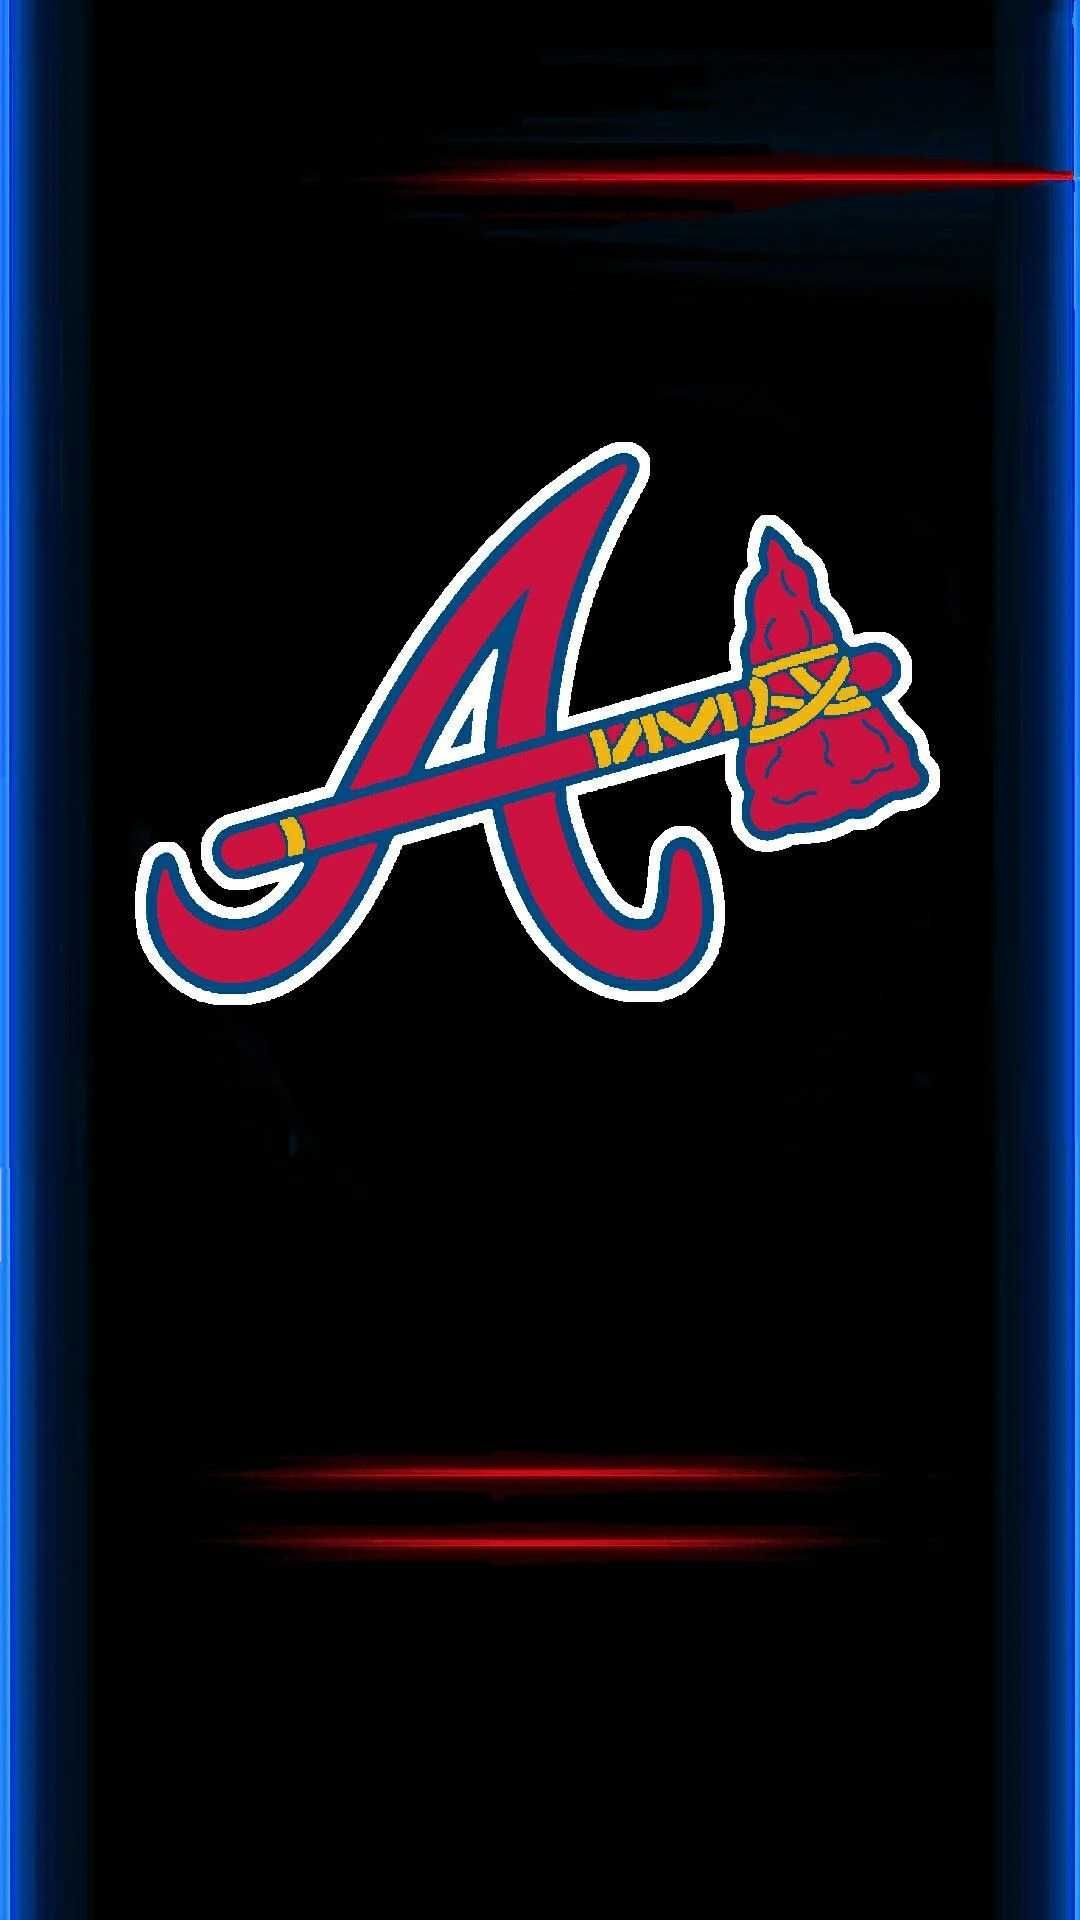 Atlanta Braves Wallpaper. Atlanta braves wallpaper, Atlanta braves iphone wallpaper, Braves iphone wallpaper